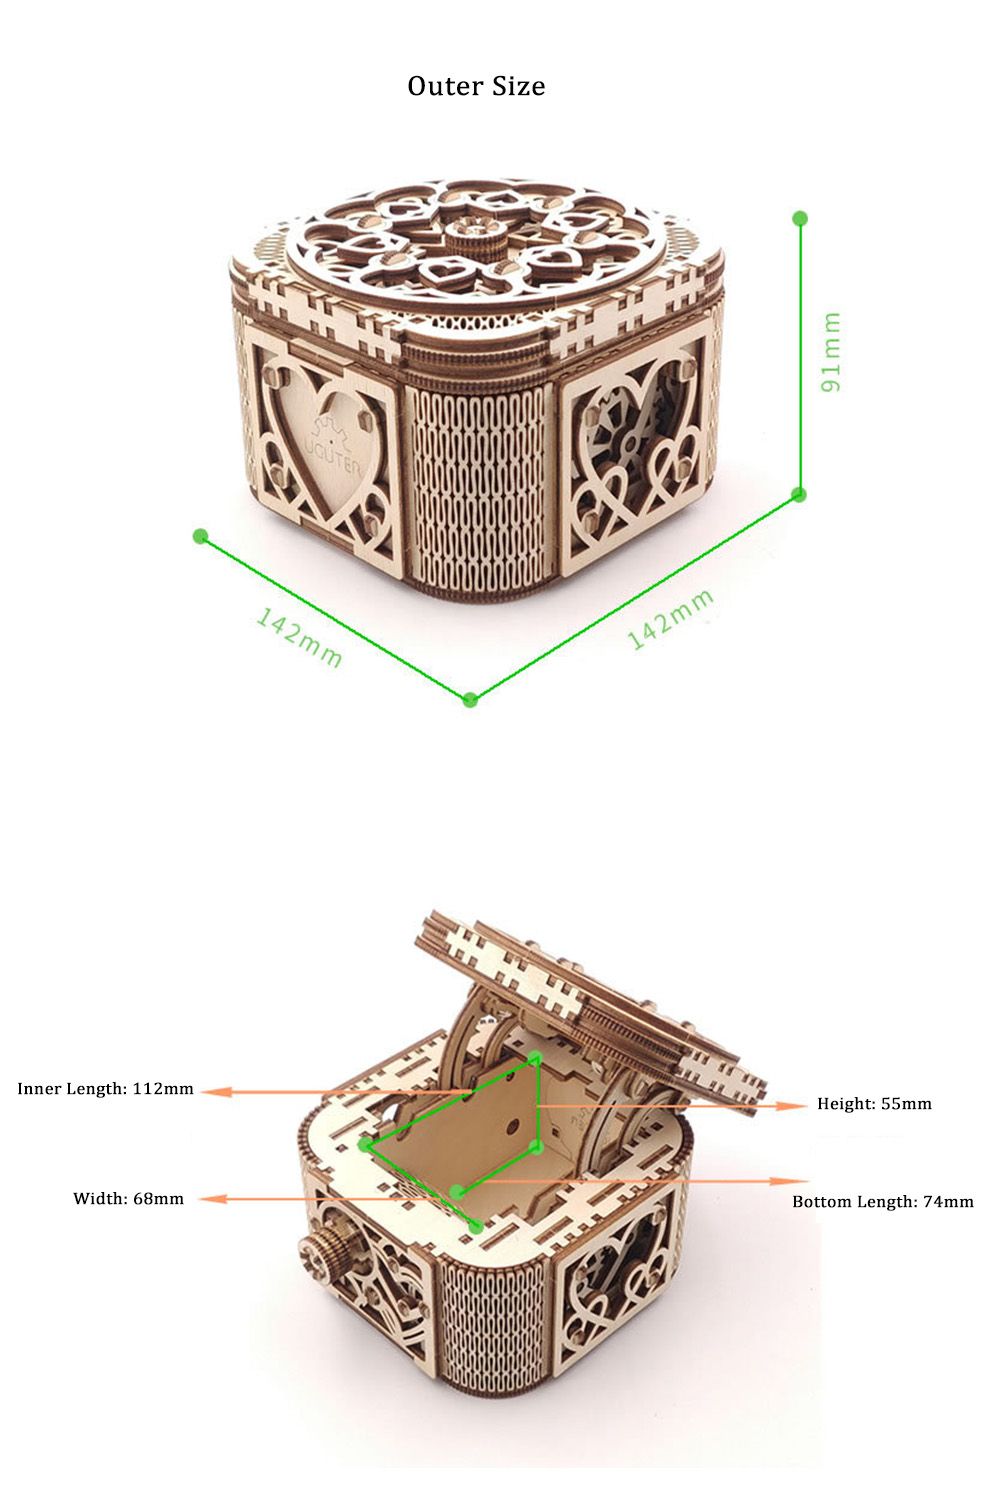 3D-Antique-Self-Assembly-Wooden-Jewelry-Storage-Box-Secret-Box-Key-Rotating-Laser-Cut-Parts-Puzzle-B-1535978